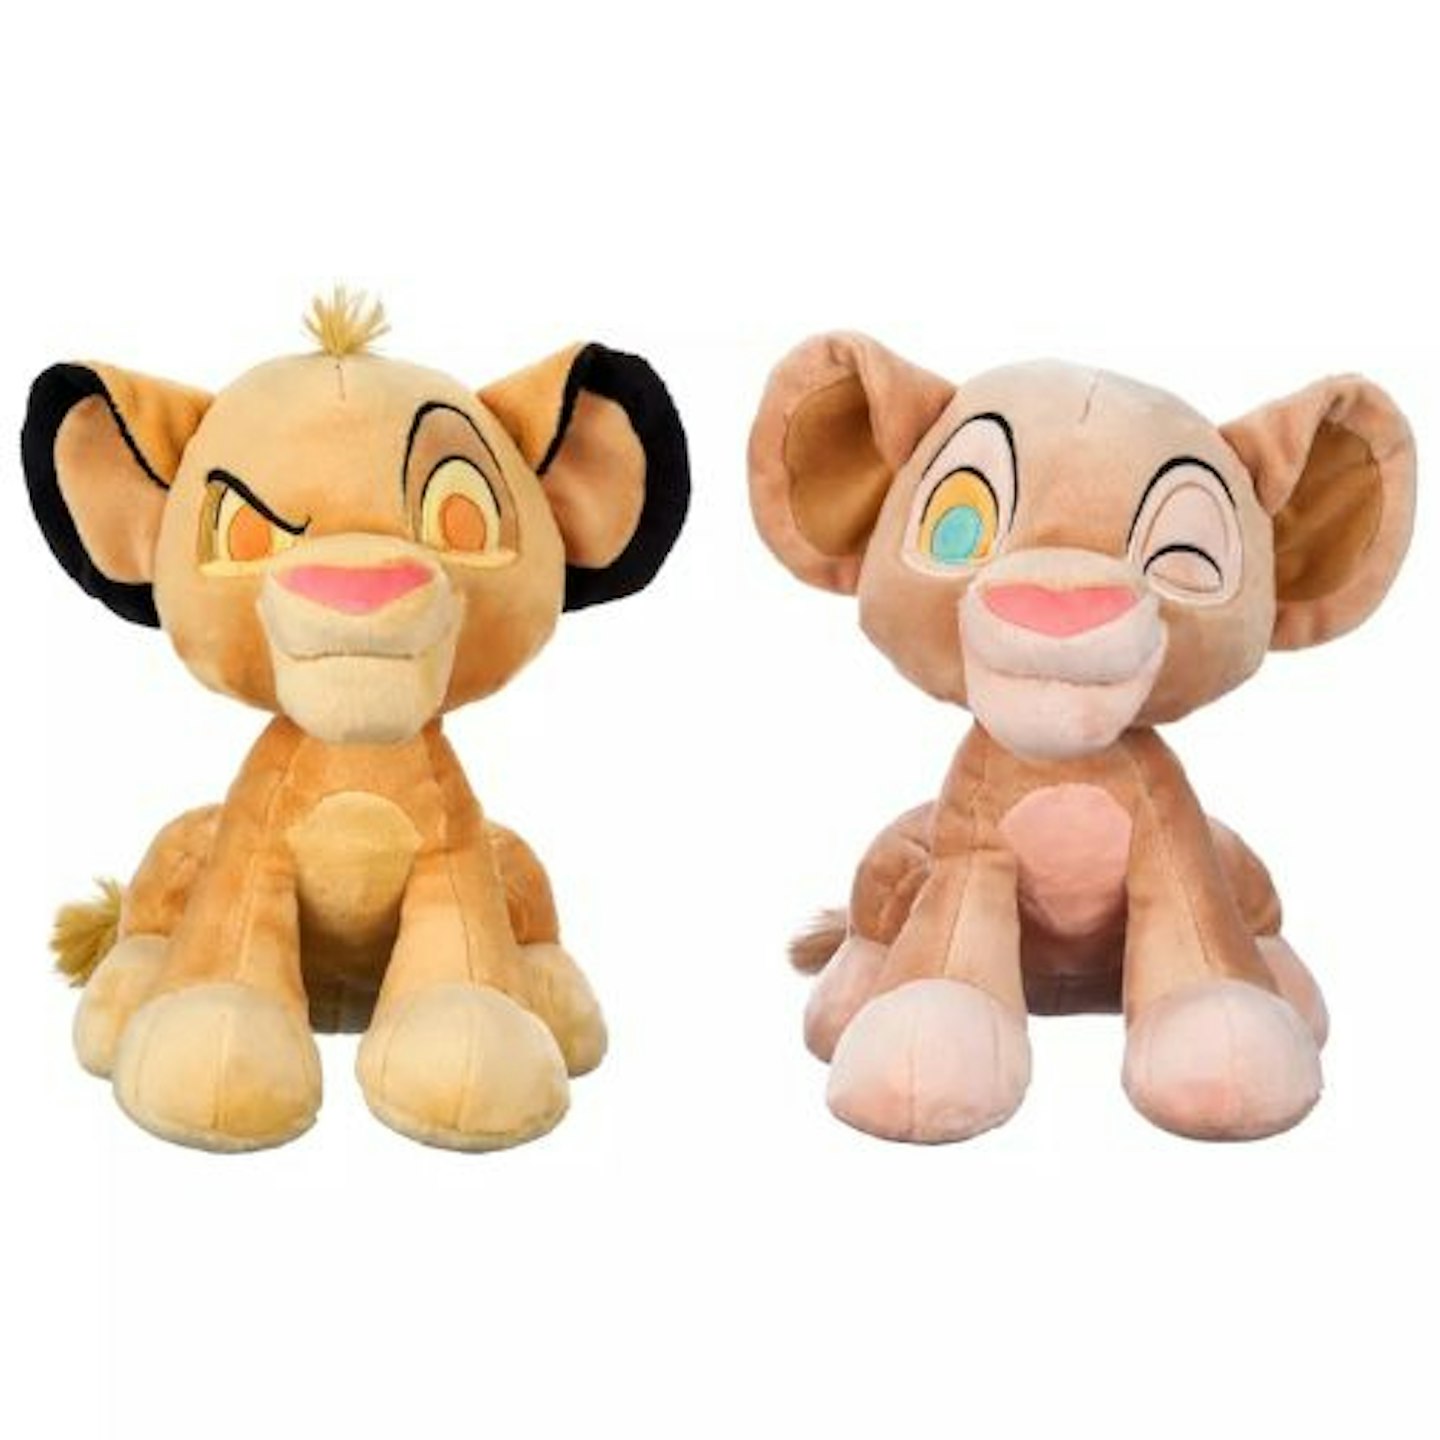 Simba and Nala Small Soft Toy Set